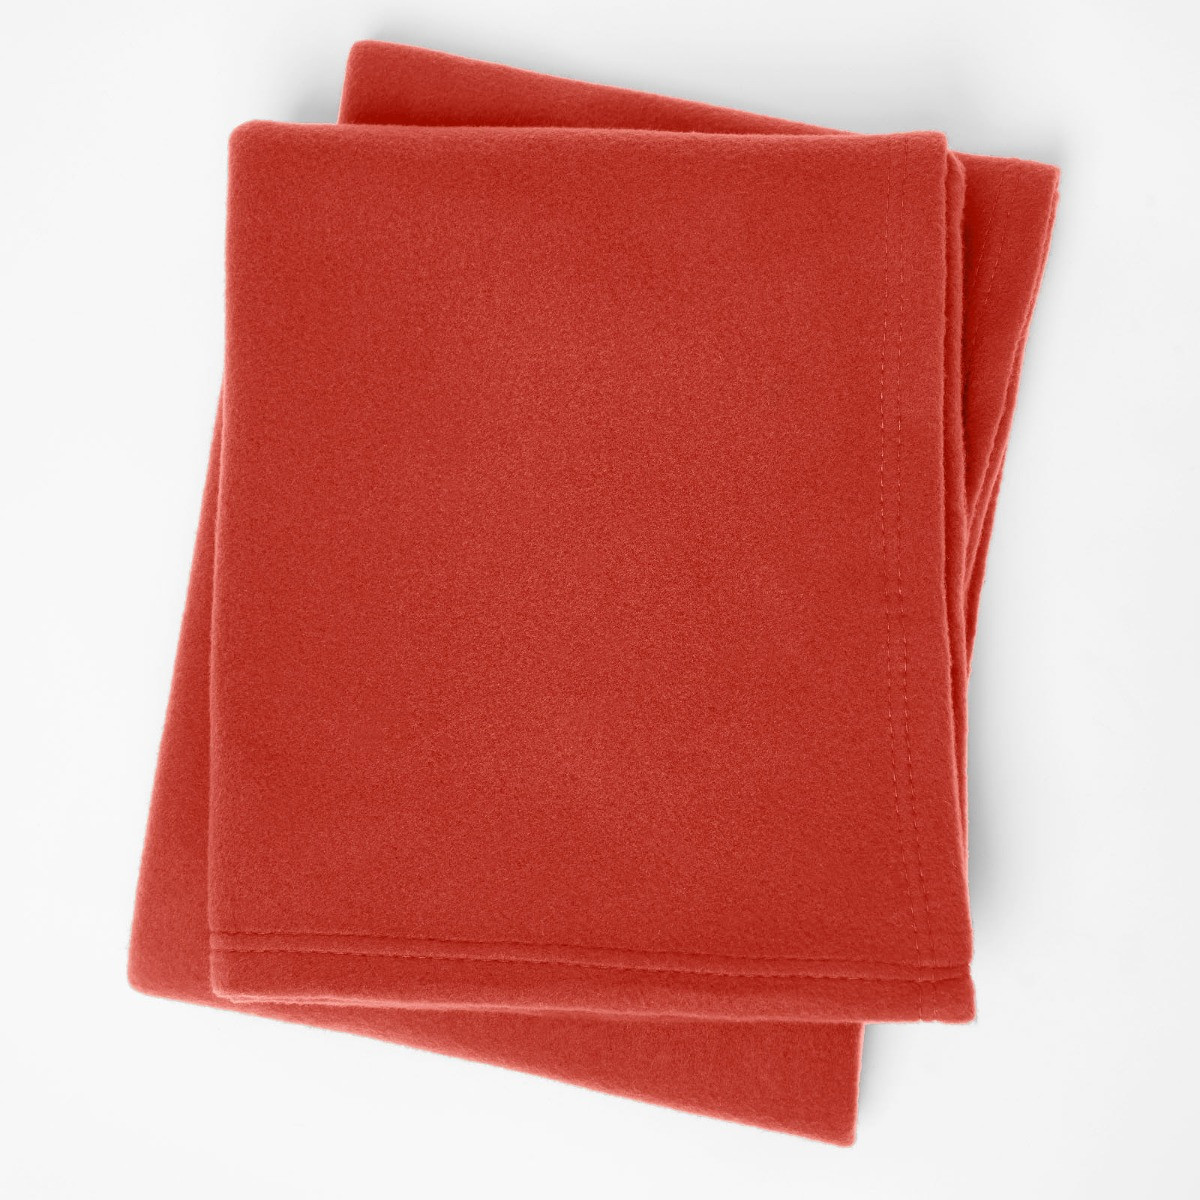 Dreamscene Plain Fleece Throw, Red - 60 x 80 inches>